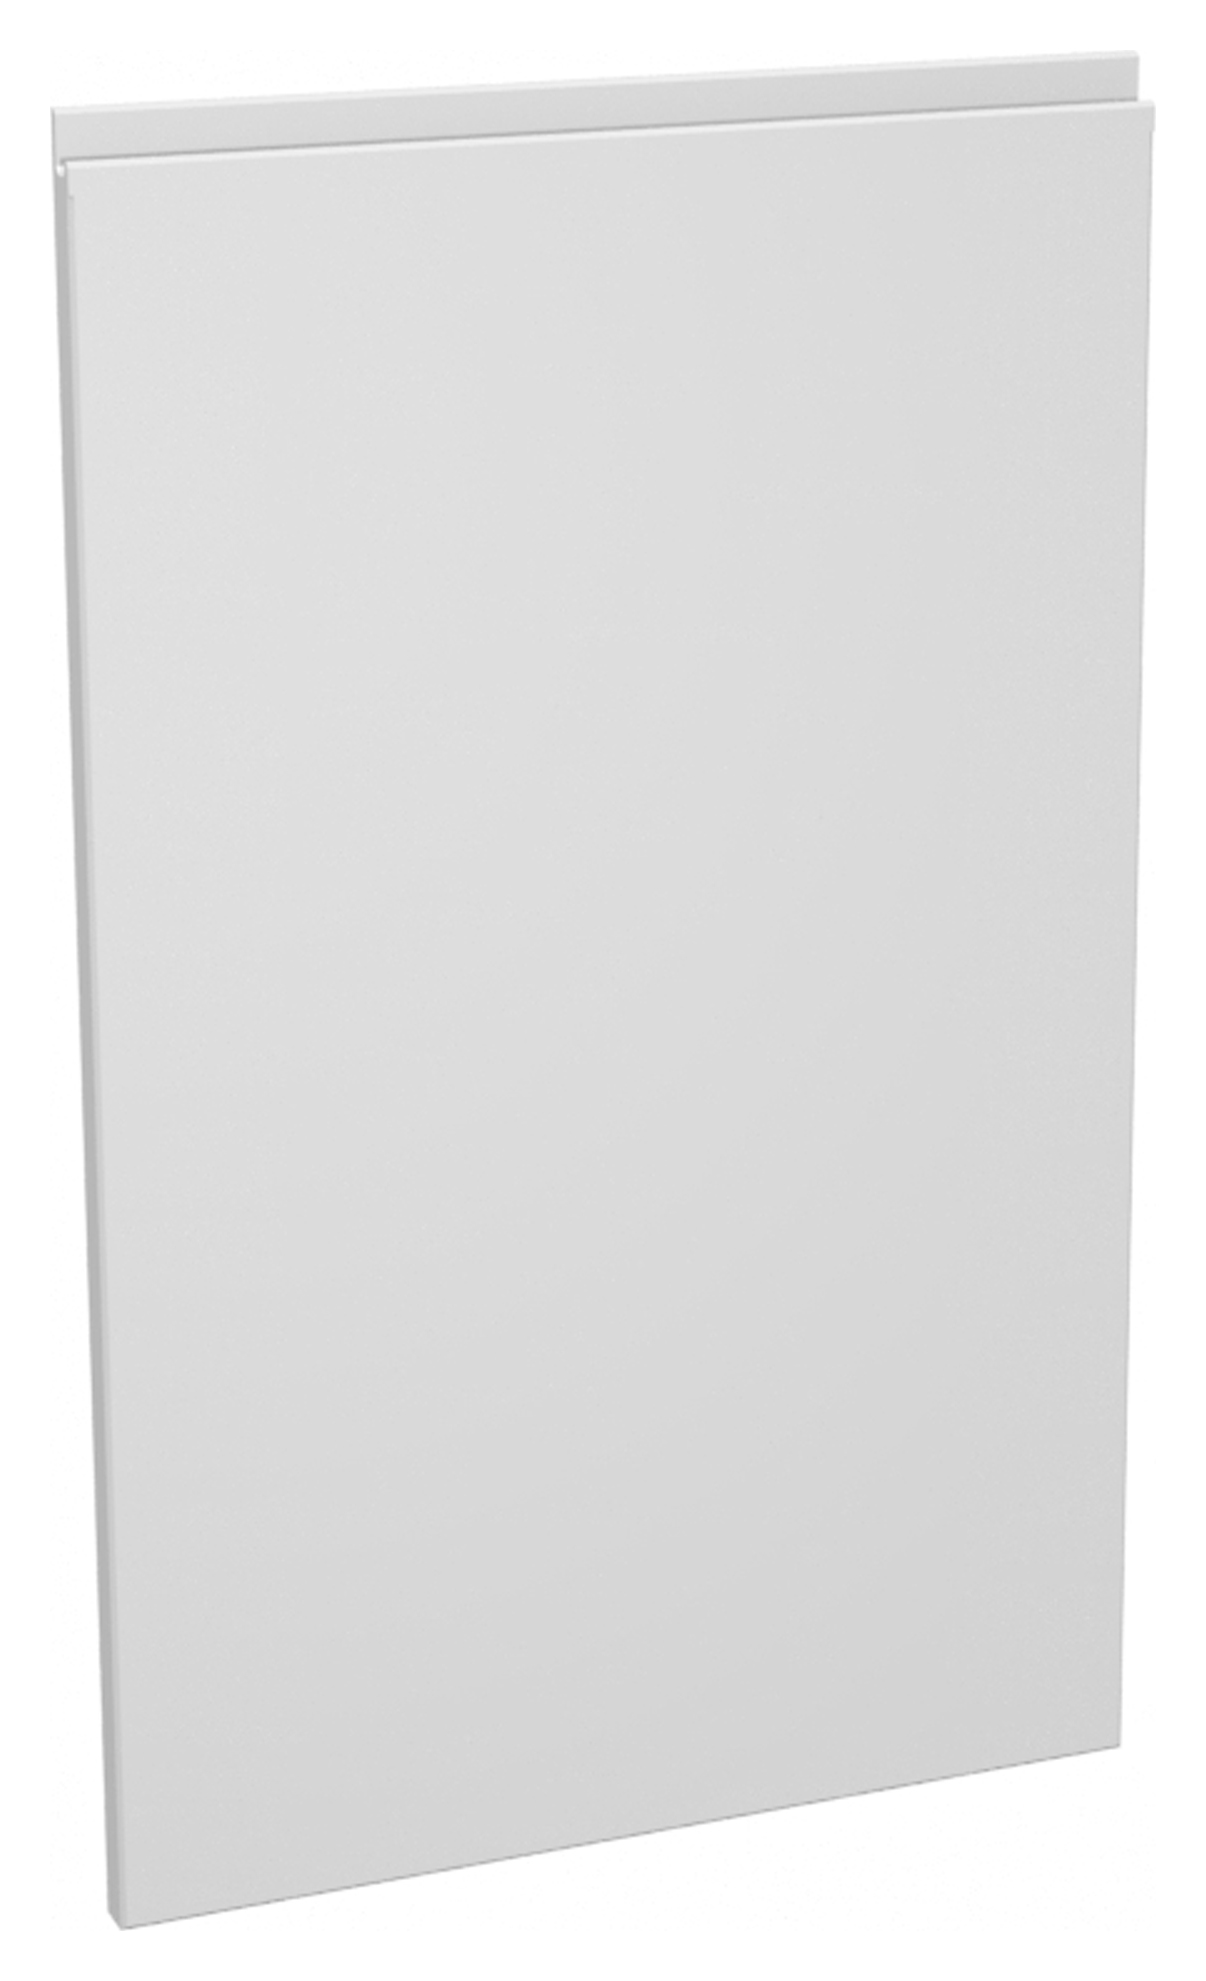 Image of Wickes Madison Matt White Appliance Fascia - 450 x 731mm